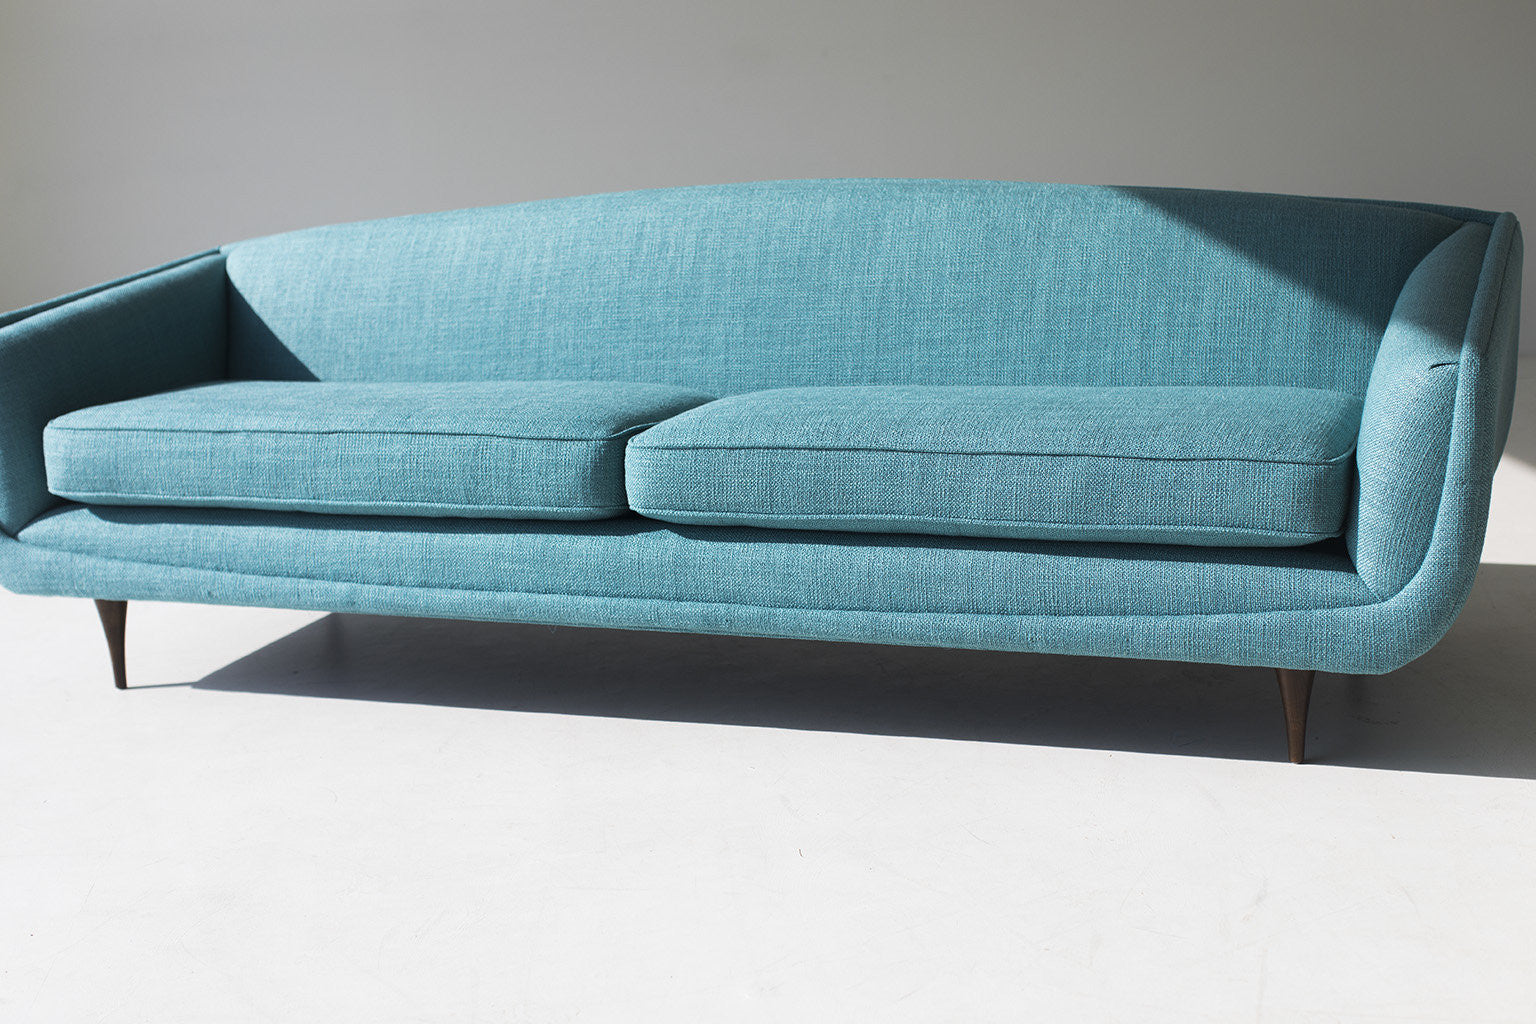 Selig Sofa Designer Attributed to William Hinn - 02061702